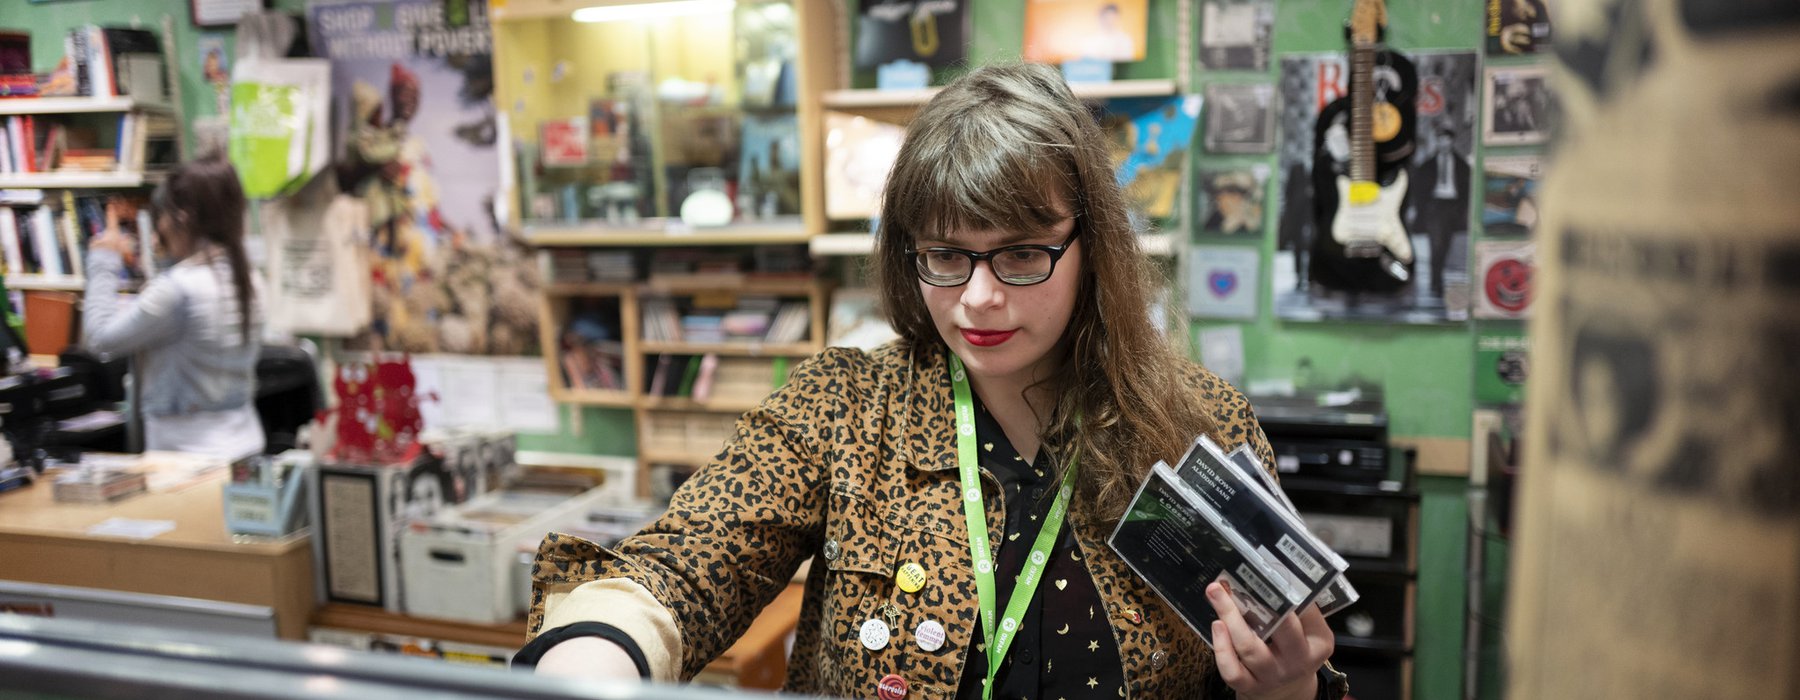 Music shop volunteer, Lucy, arranges CD display in Oxfam music shop, Byres Road, Glasgow